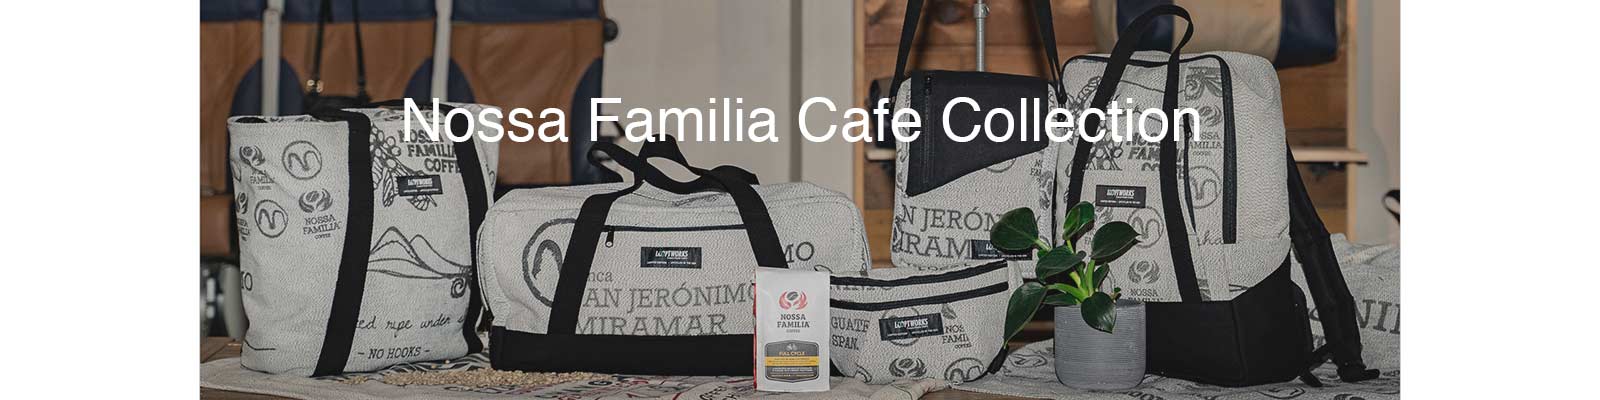 Nossa Familia Cafe Collection